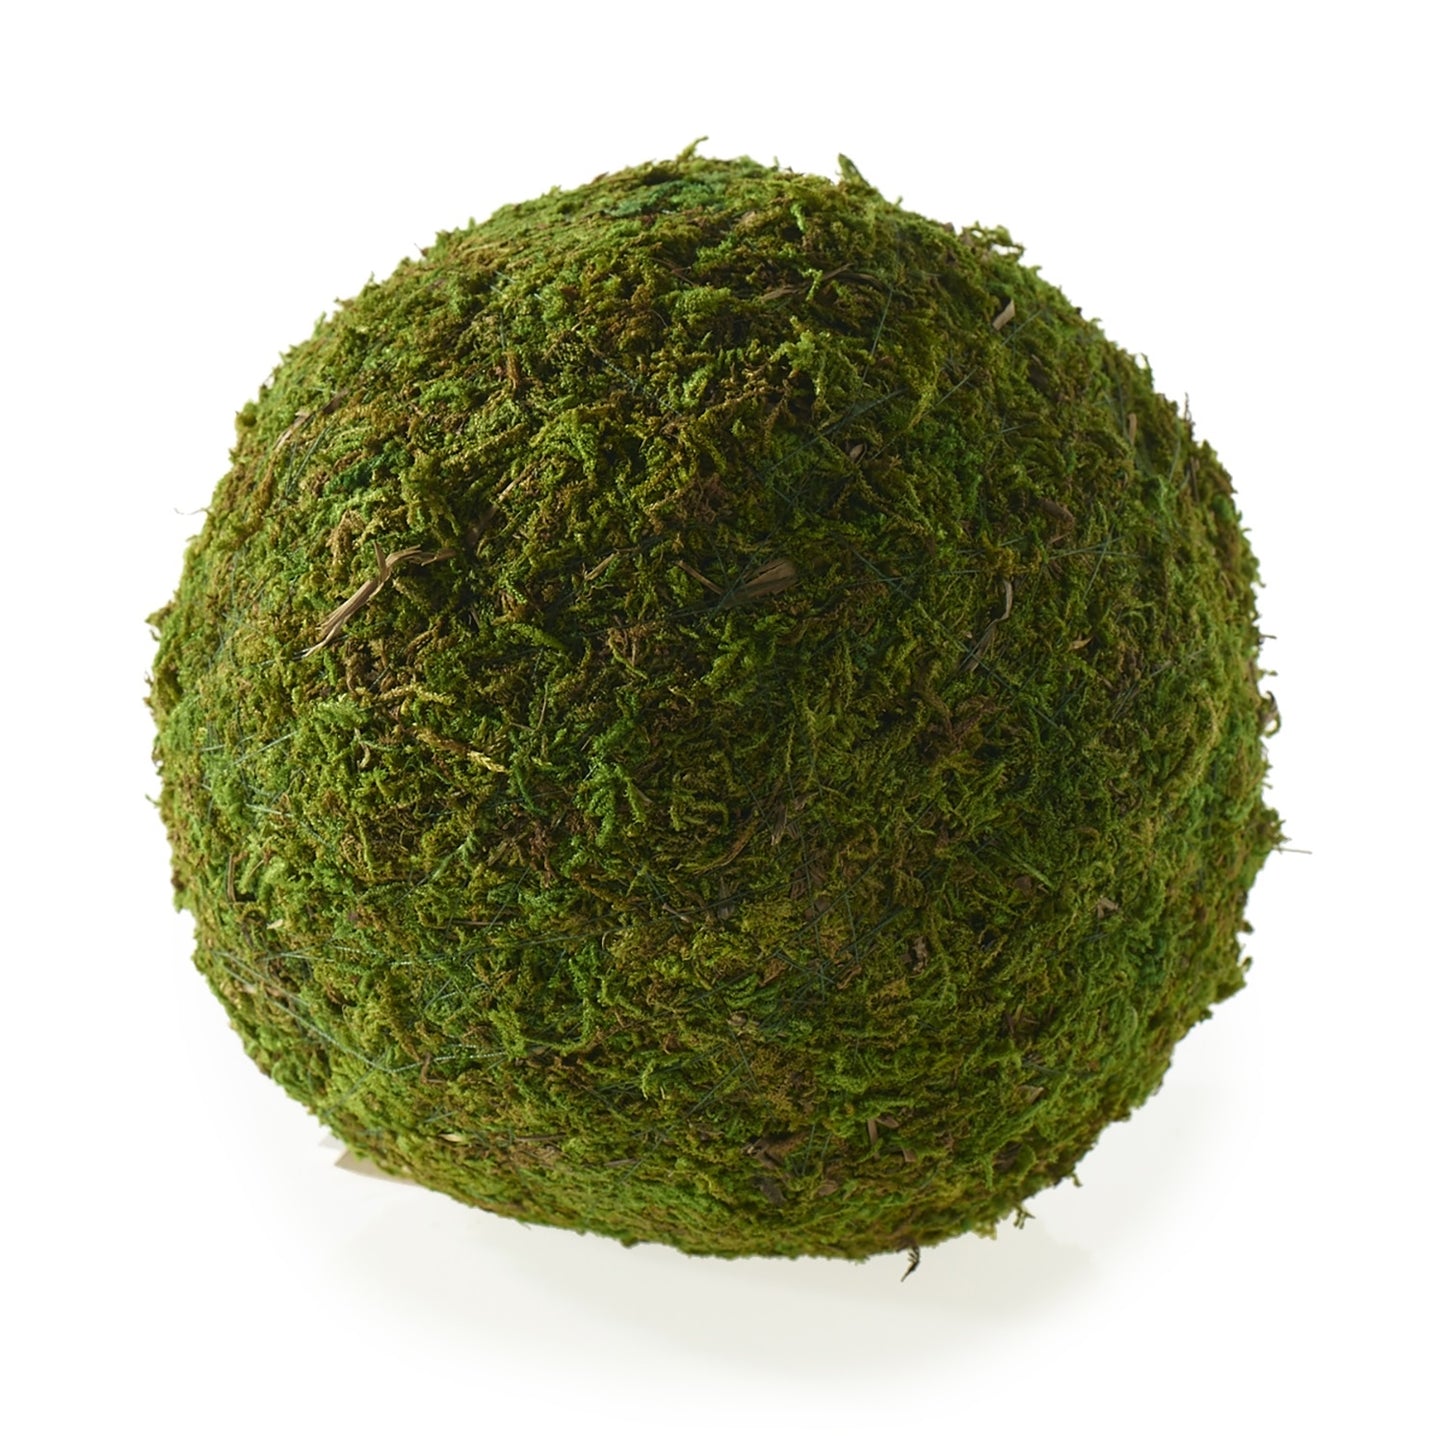 File:Decorative Moss Balls 3.jpg - Wikimedia Commons